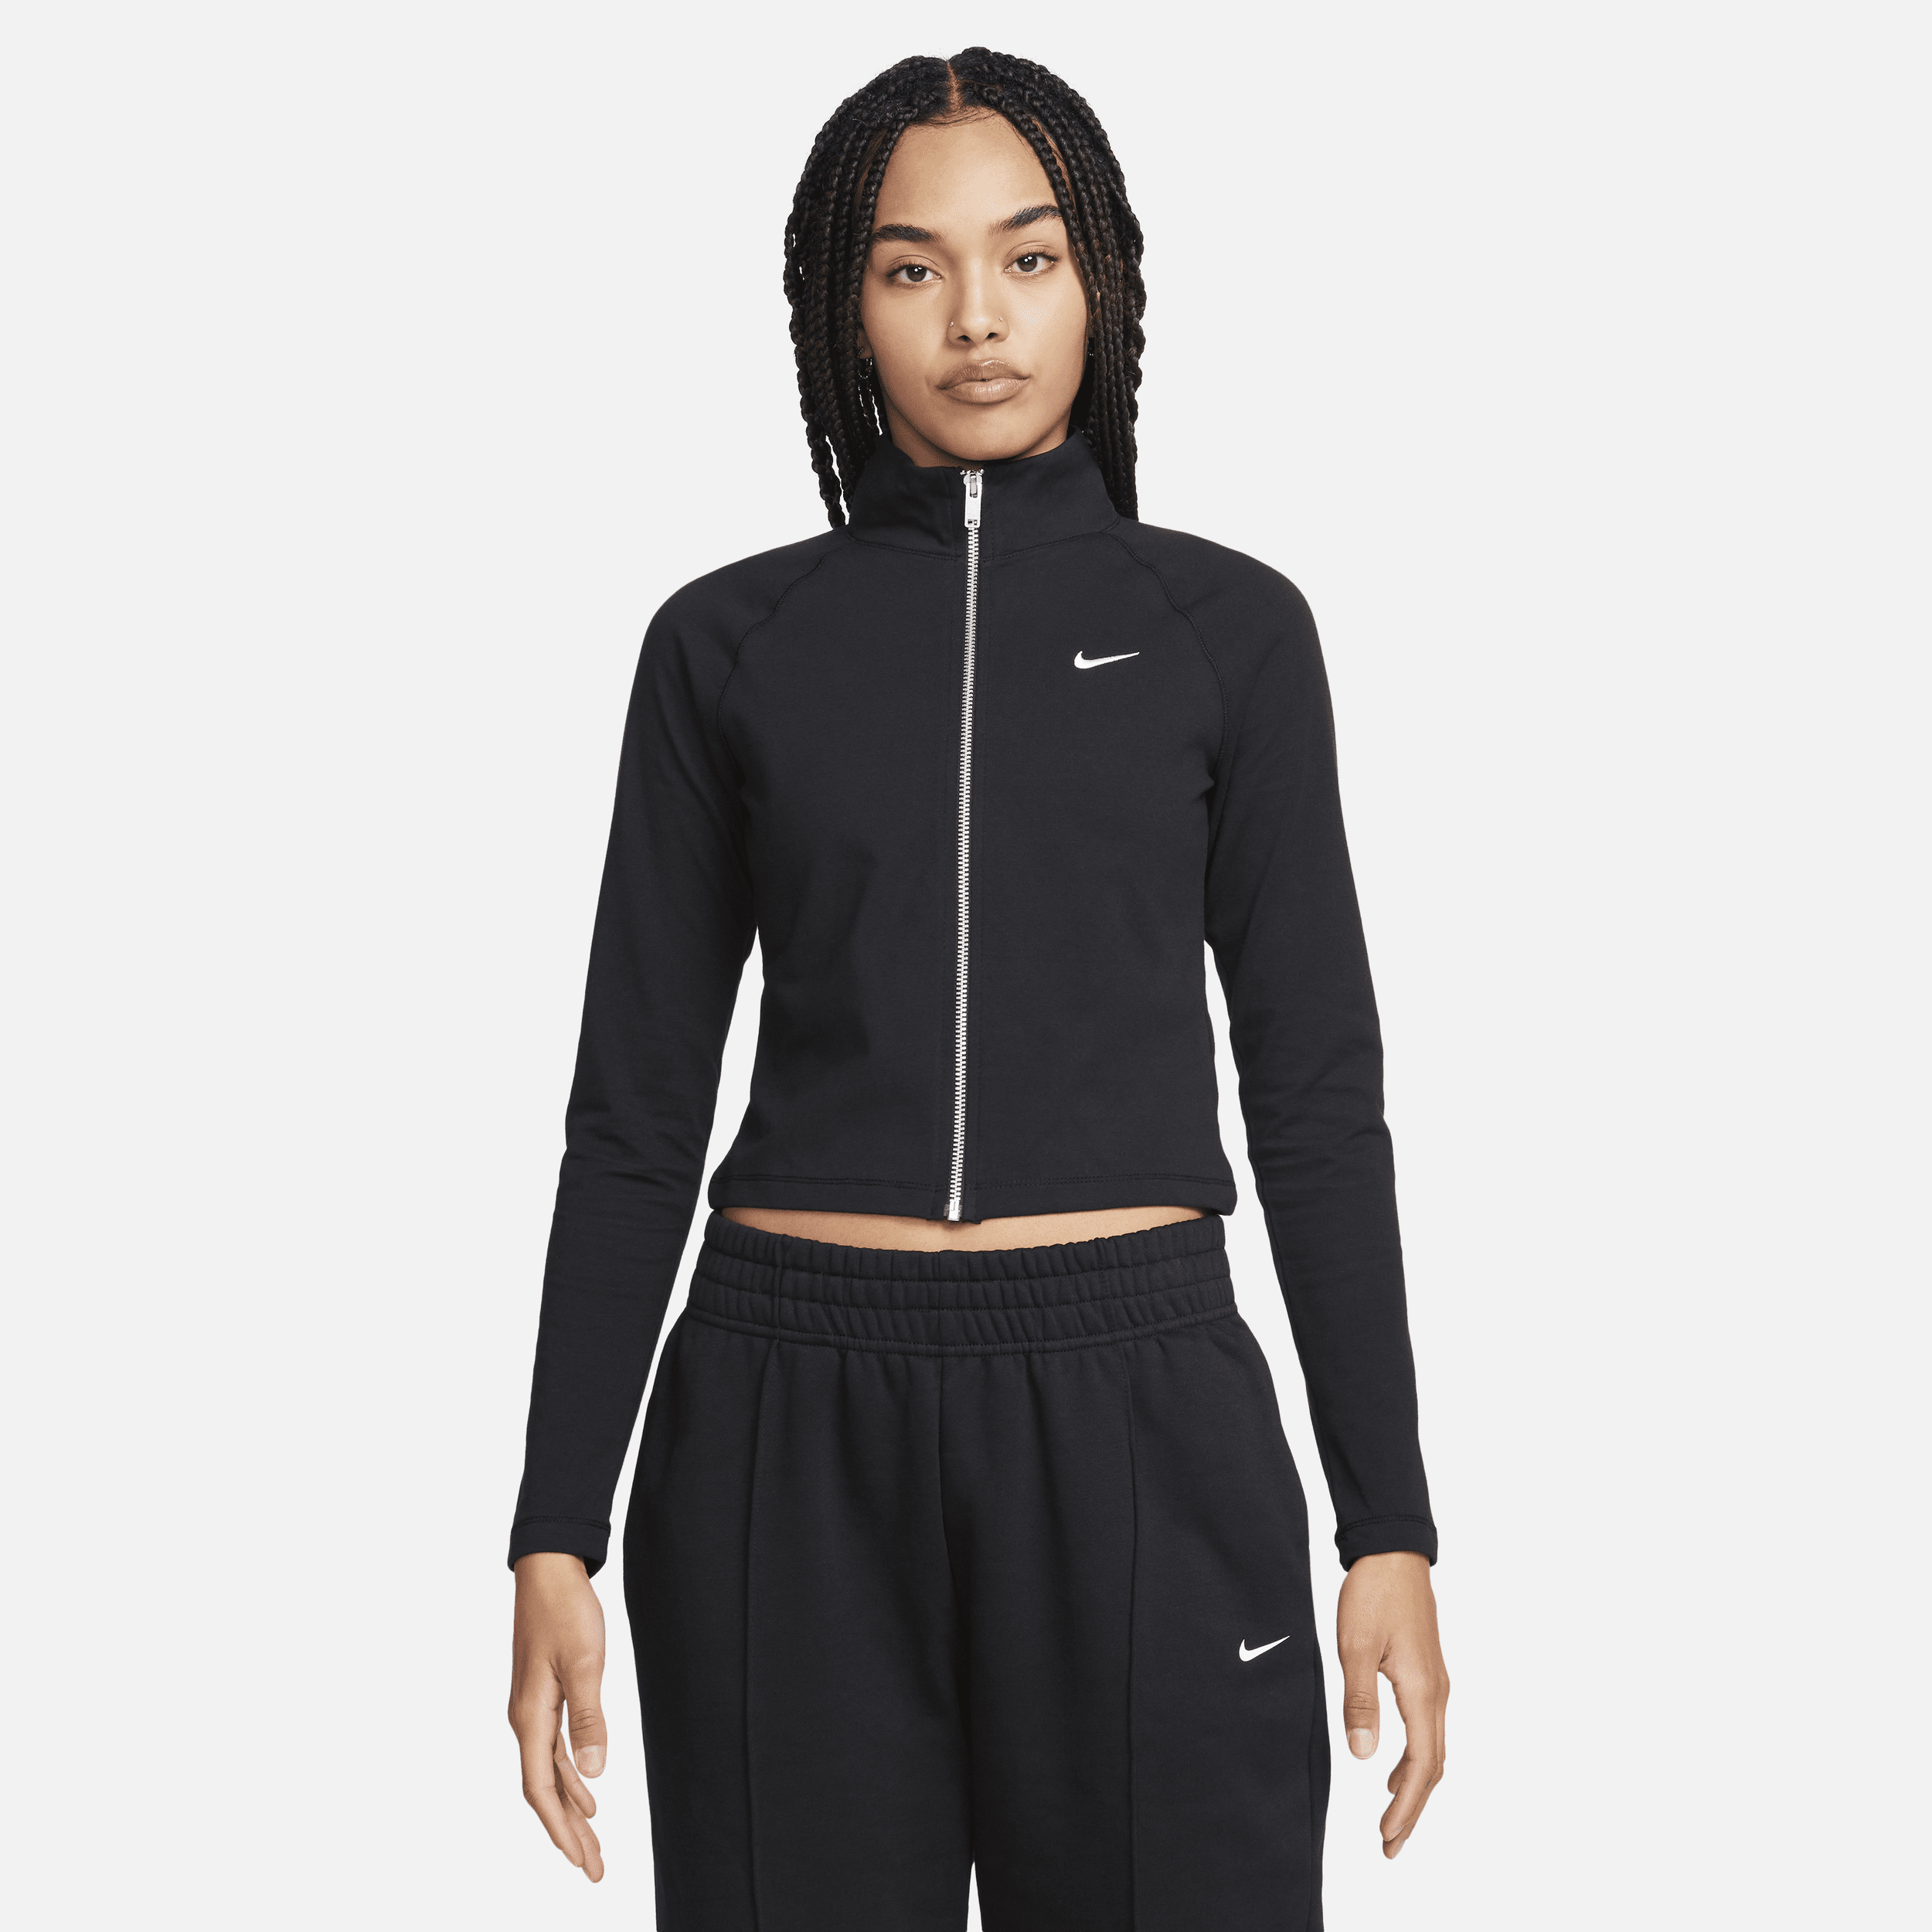 Nike Sportswear-jakke til kvinder - sort